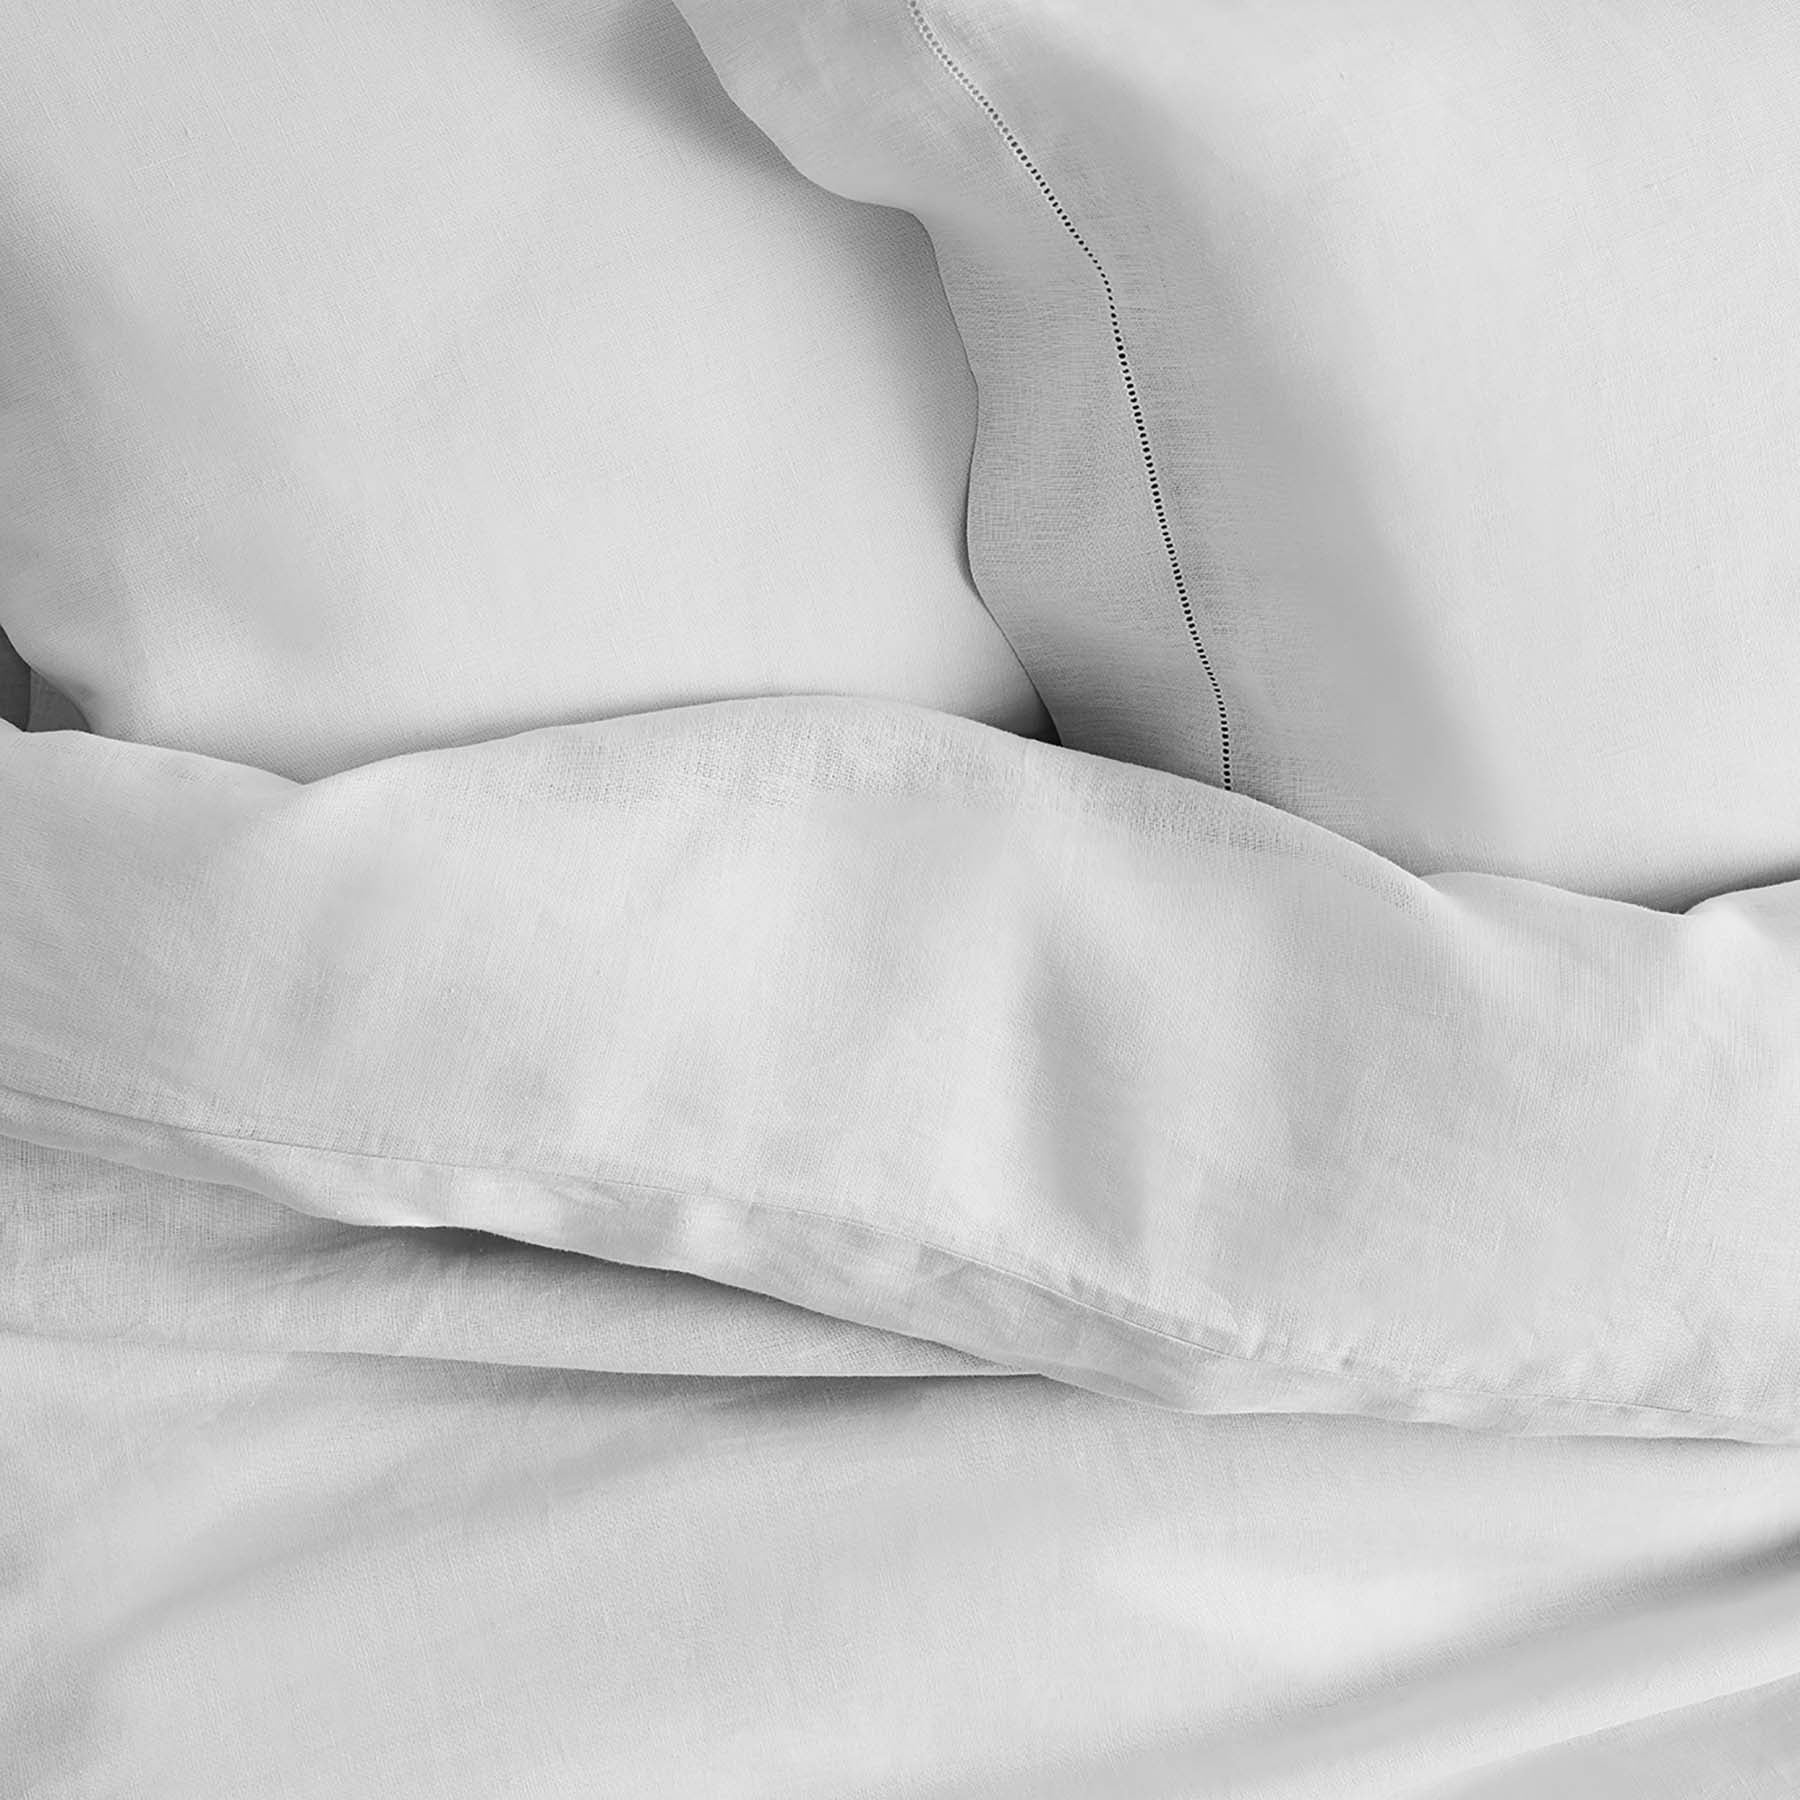 Kings & Queens Vintage Linen Duvet Cover Set in White Top Bed